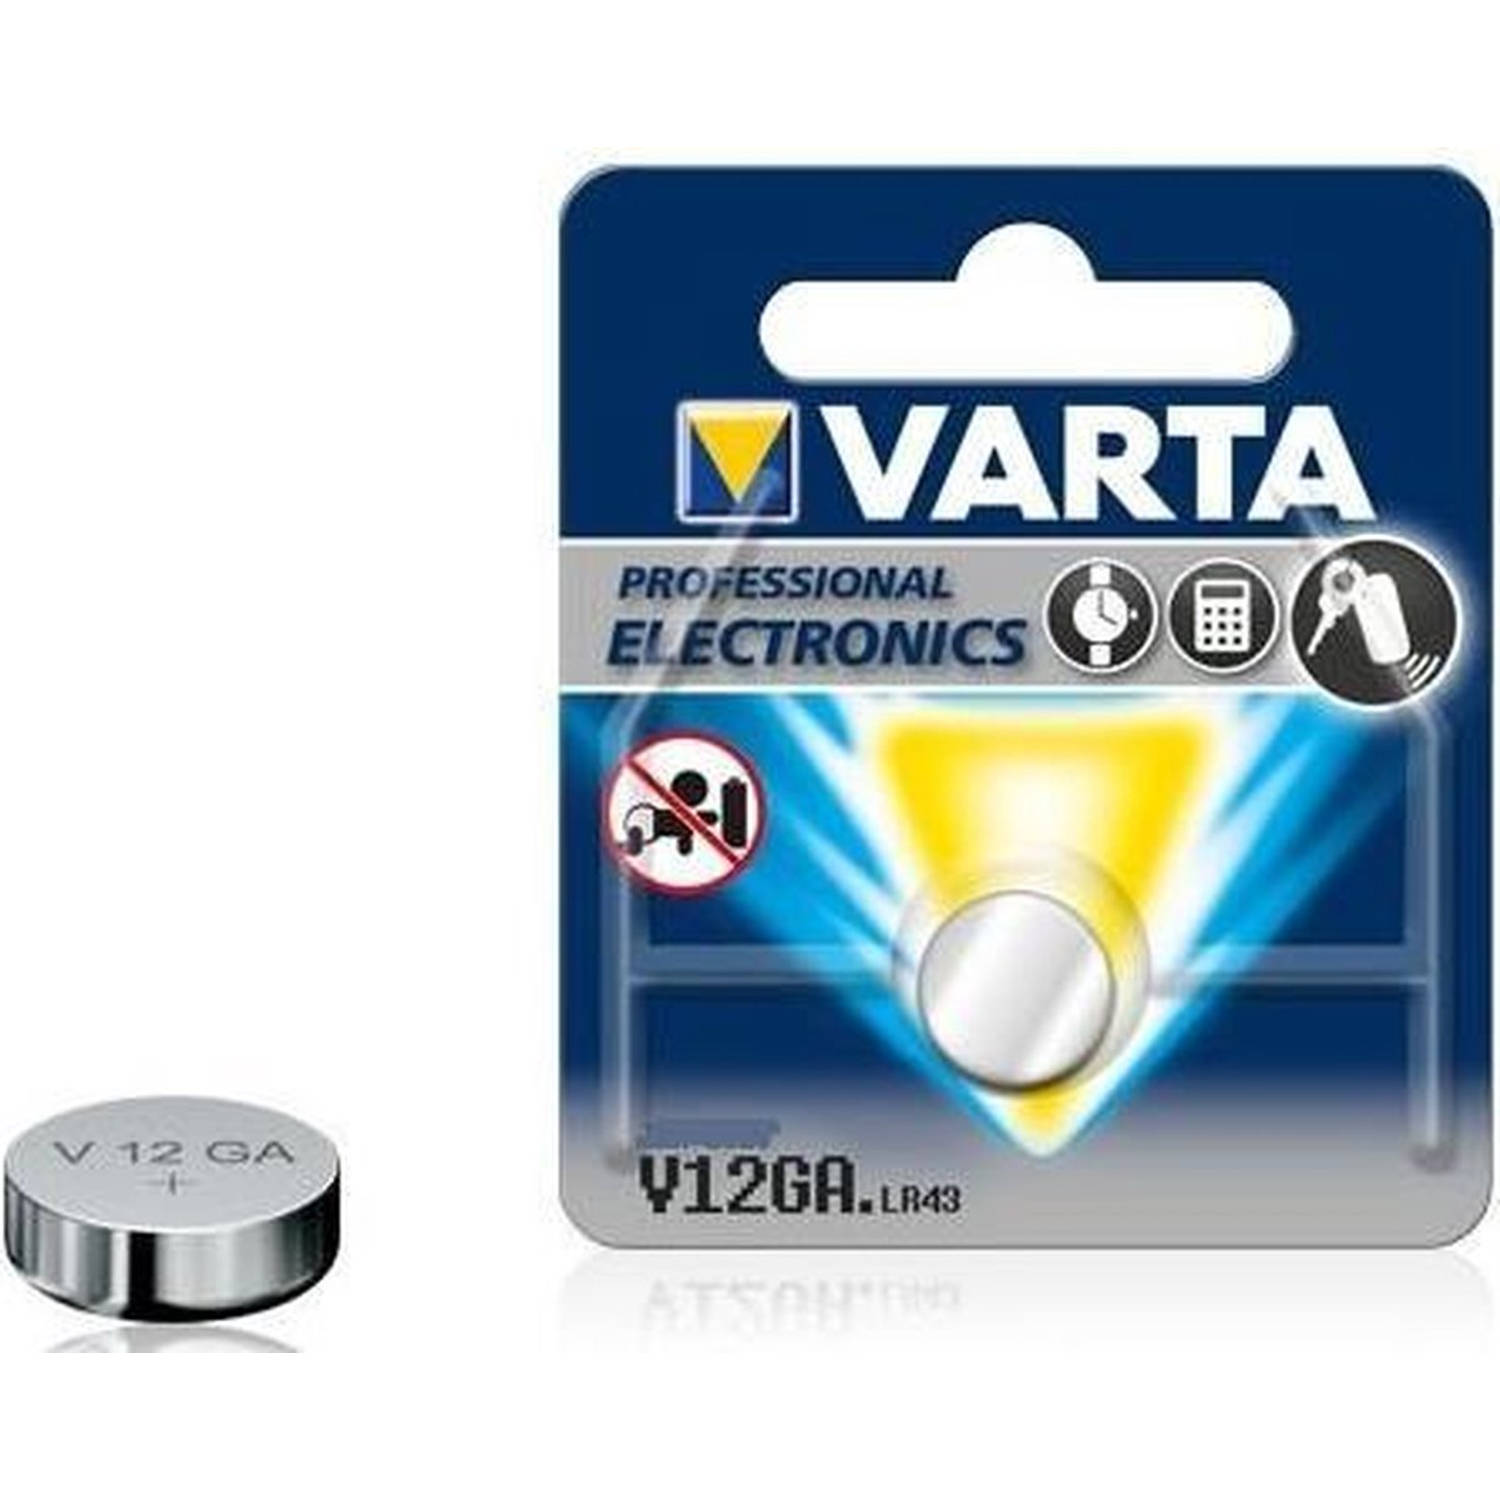 VARTA V12GA, LR43, AG12, D186, L1142 1.5V 80mAh batterij - 10 Stuks